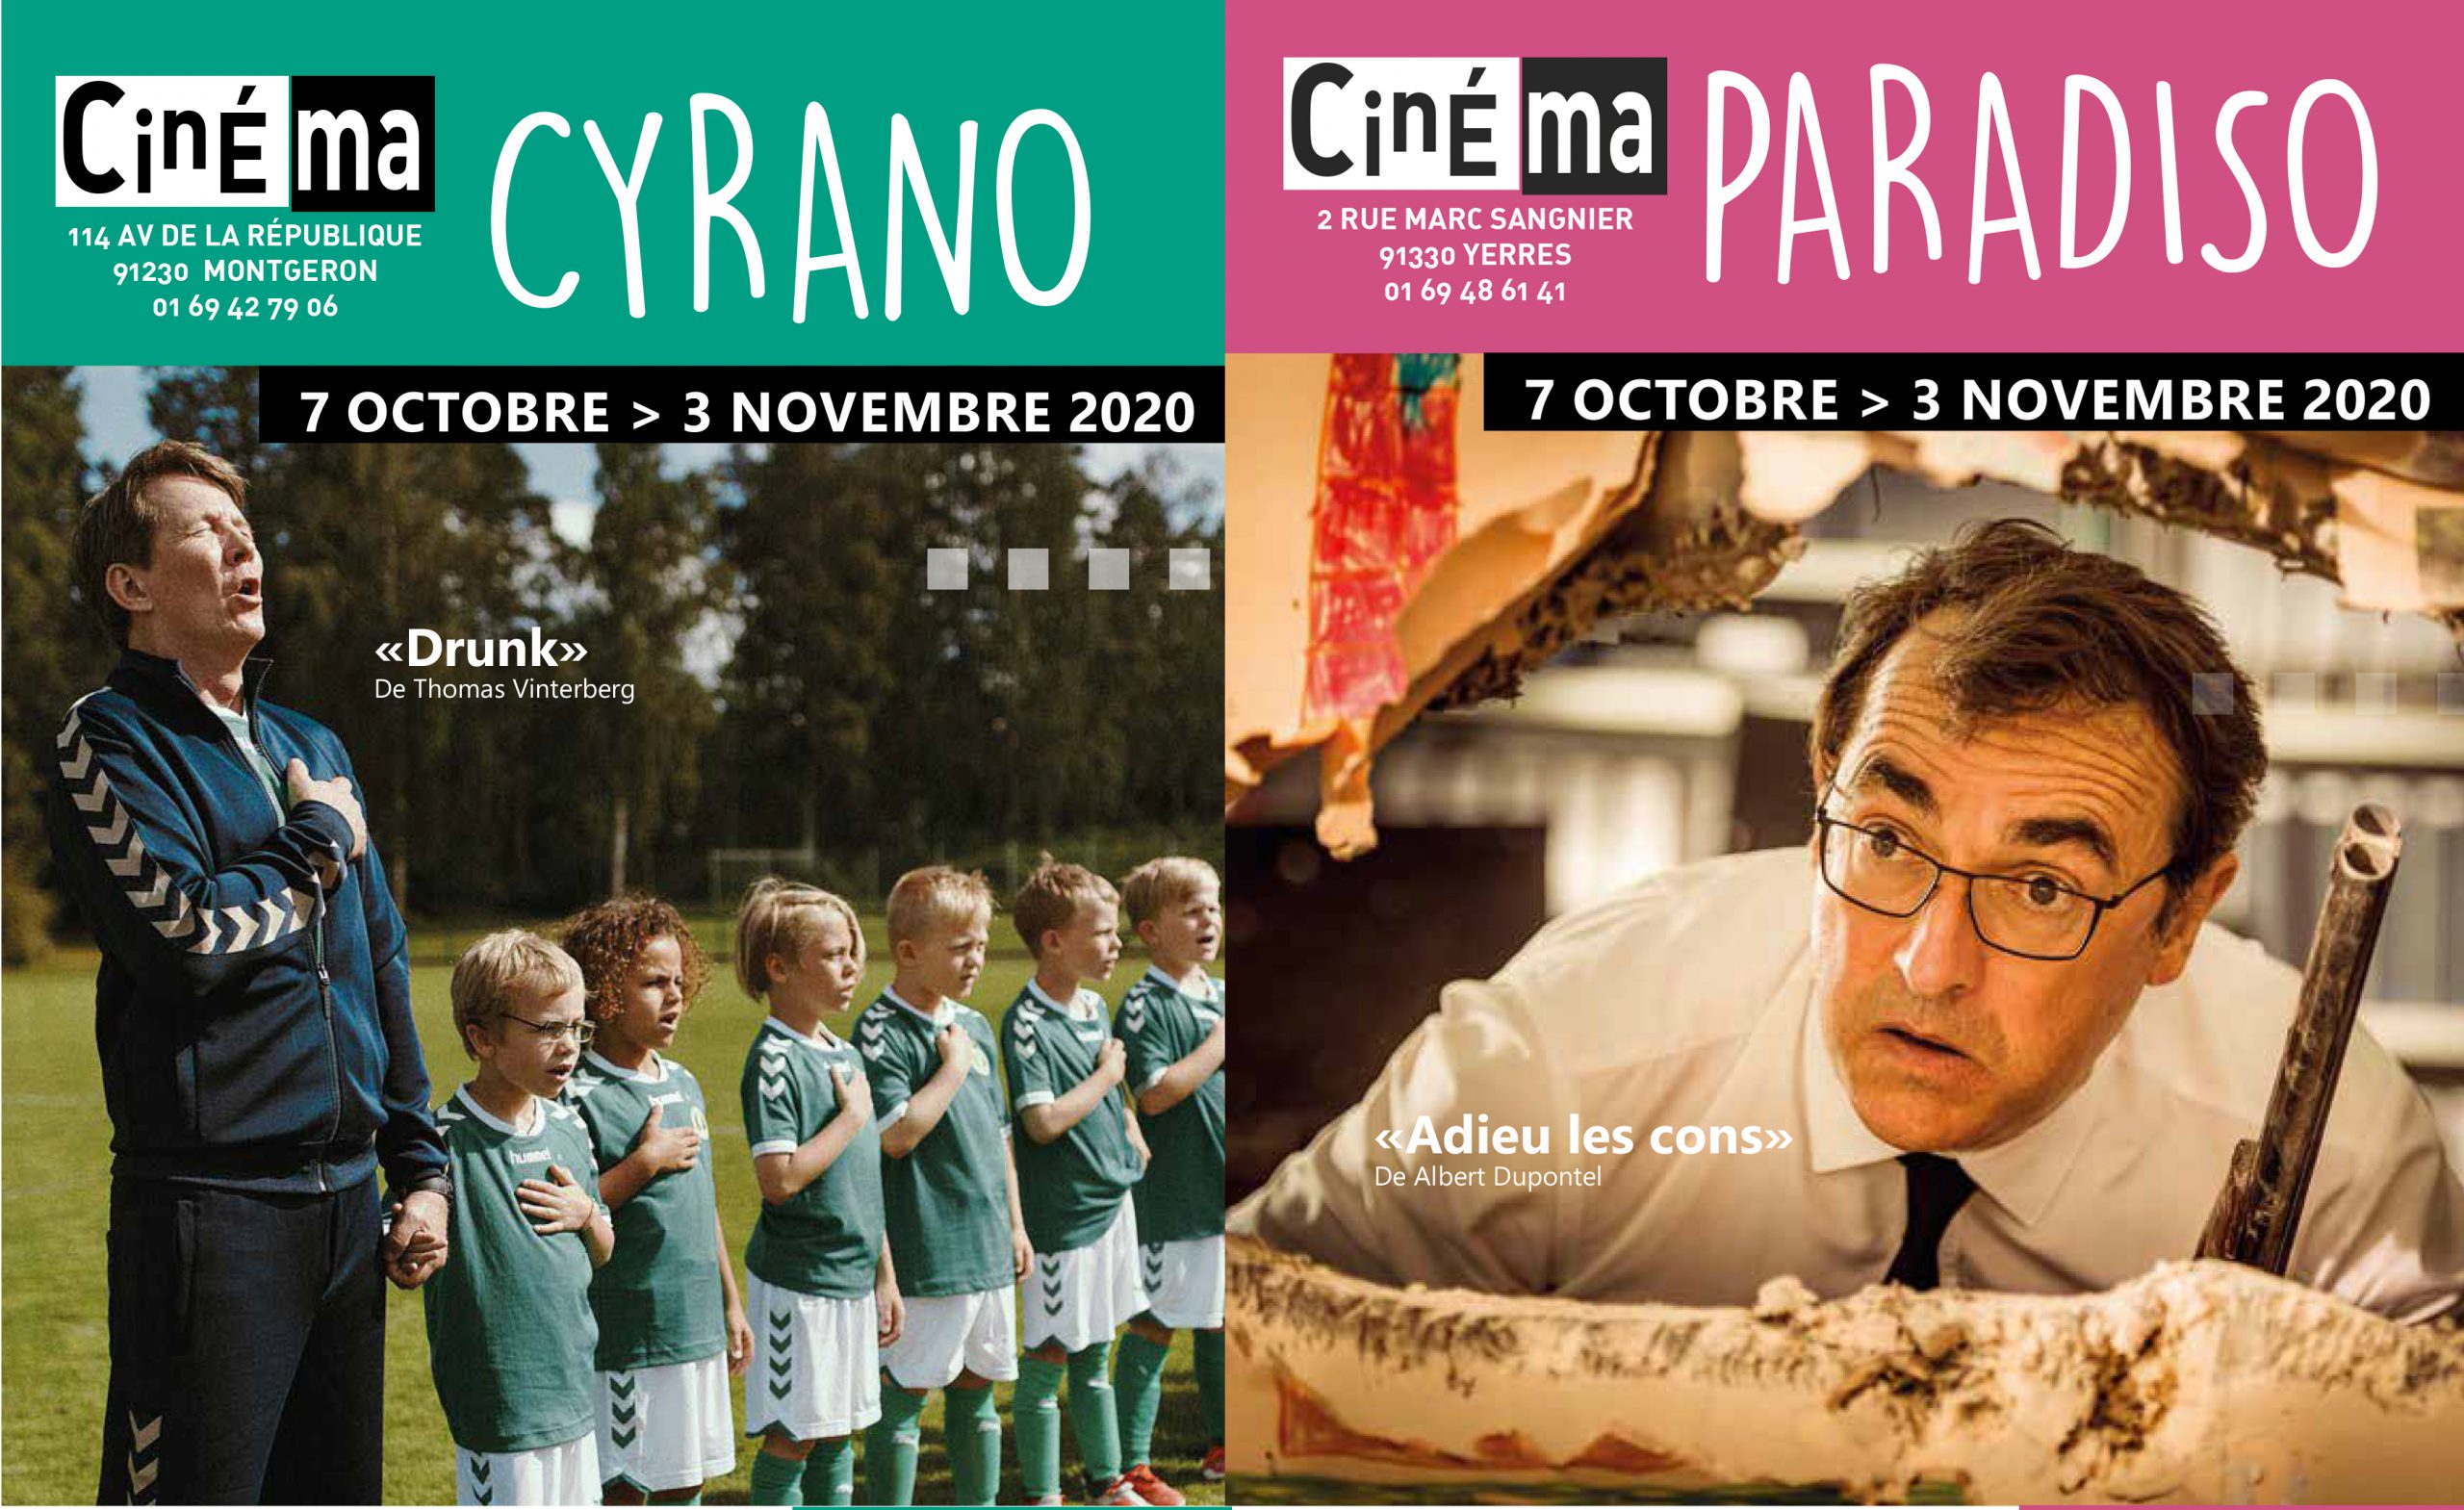 Programme du Cyrano et du Paradiso octobre 2020